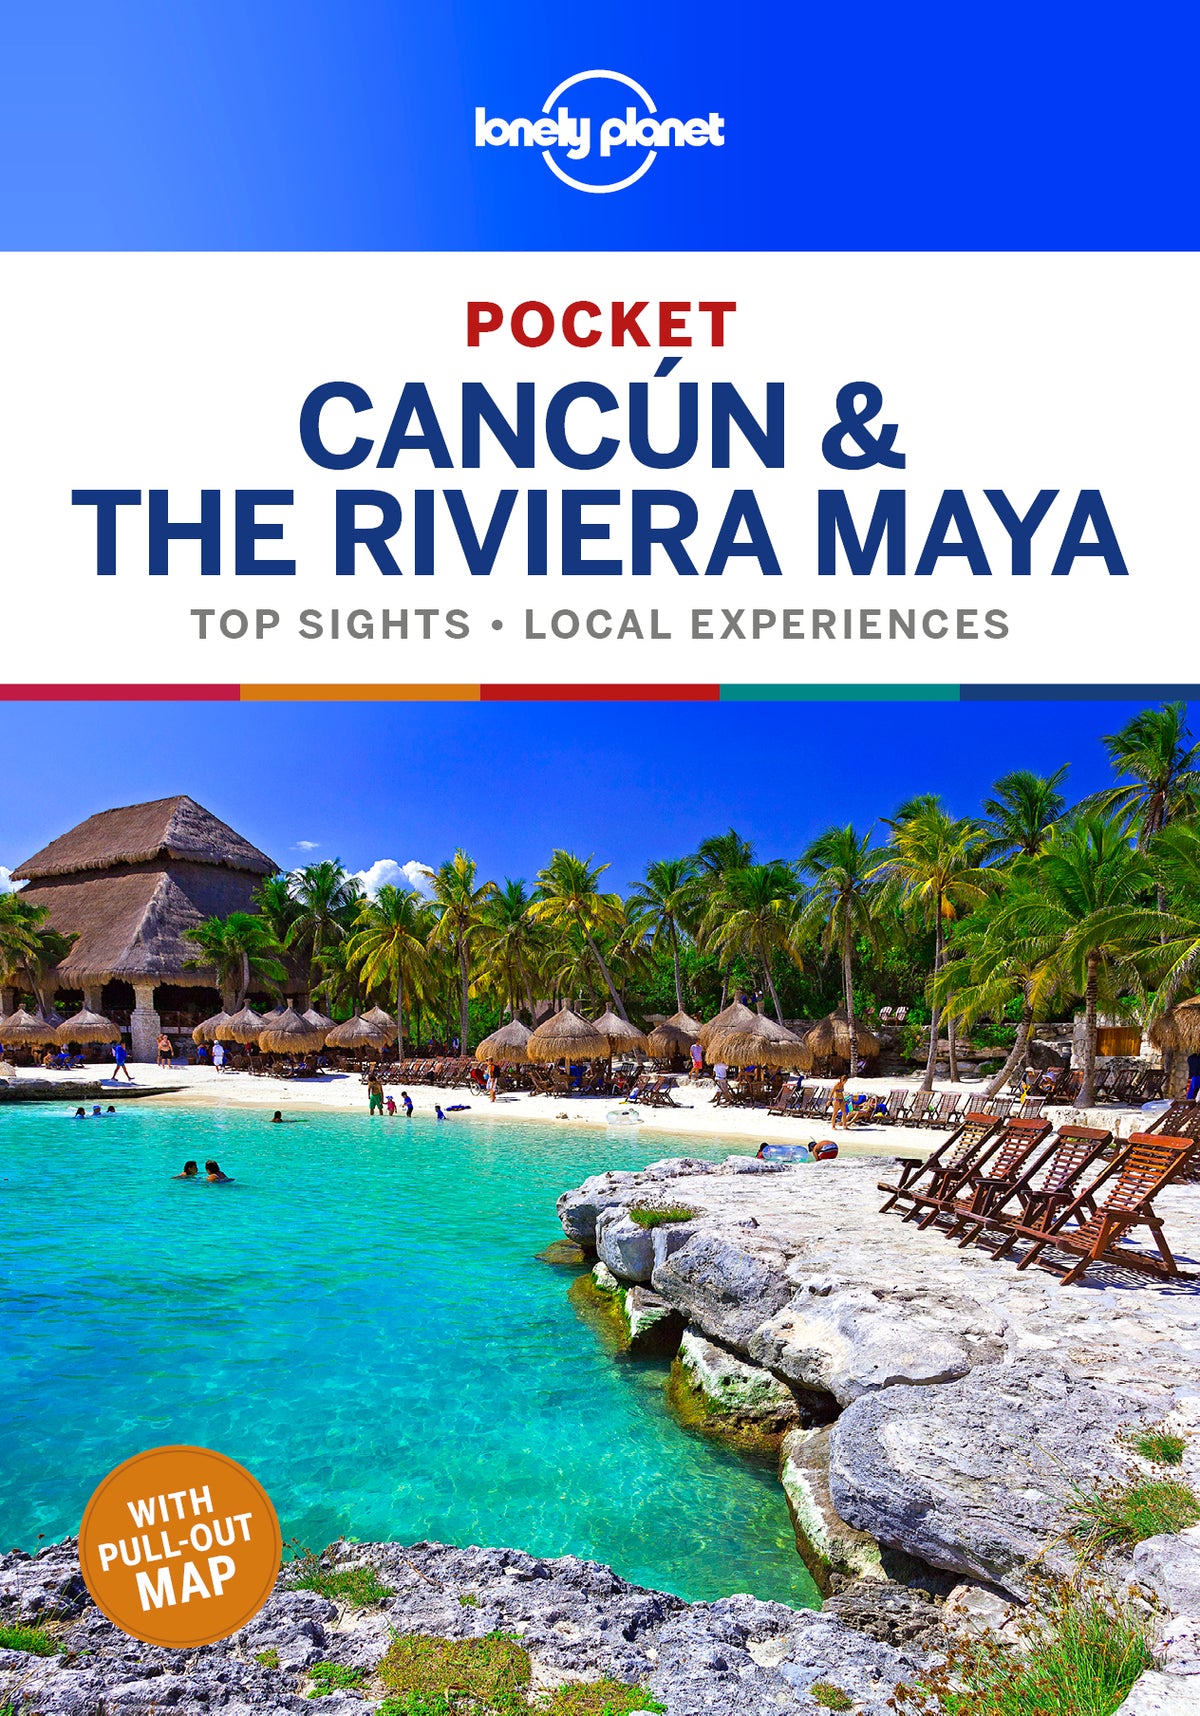 Pocket Cancun & the Riviera Maya preview